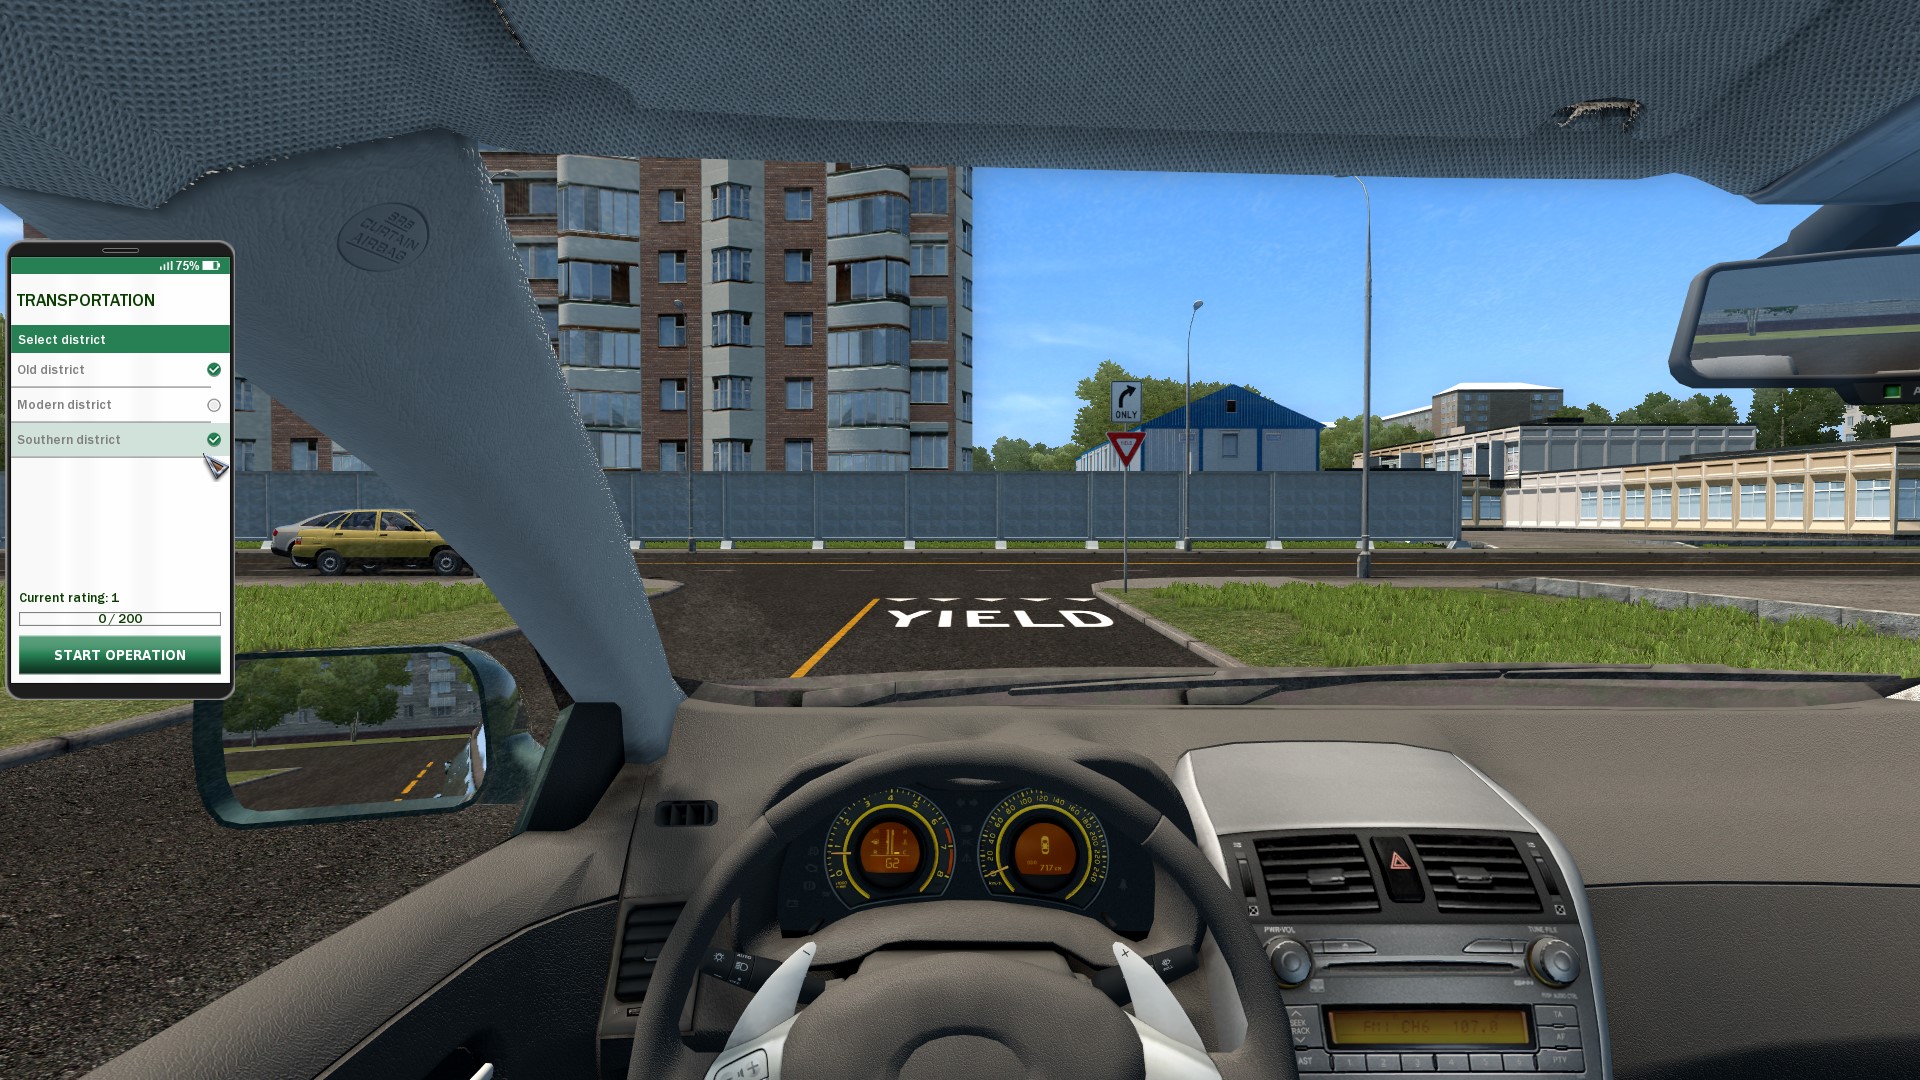 City Car Driving On Steam - скачать roblox l all vehicle simulator codes 2018 working